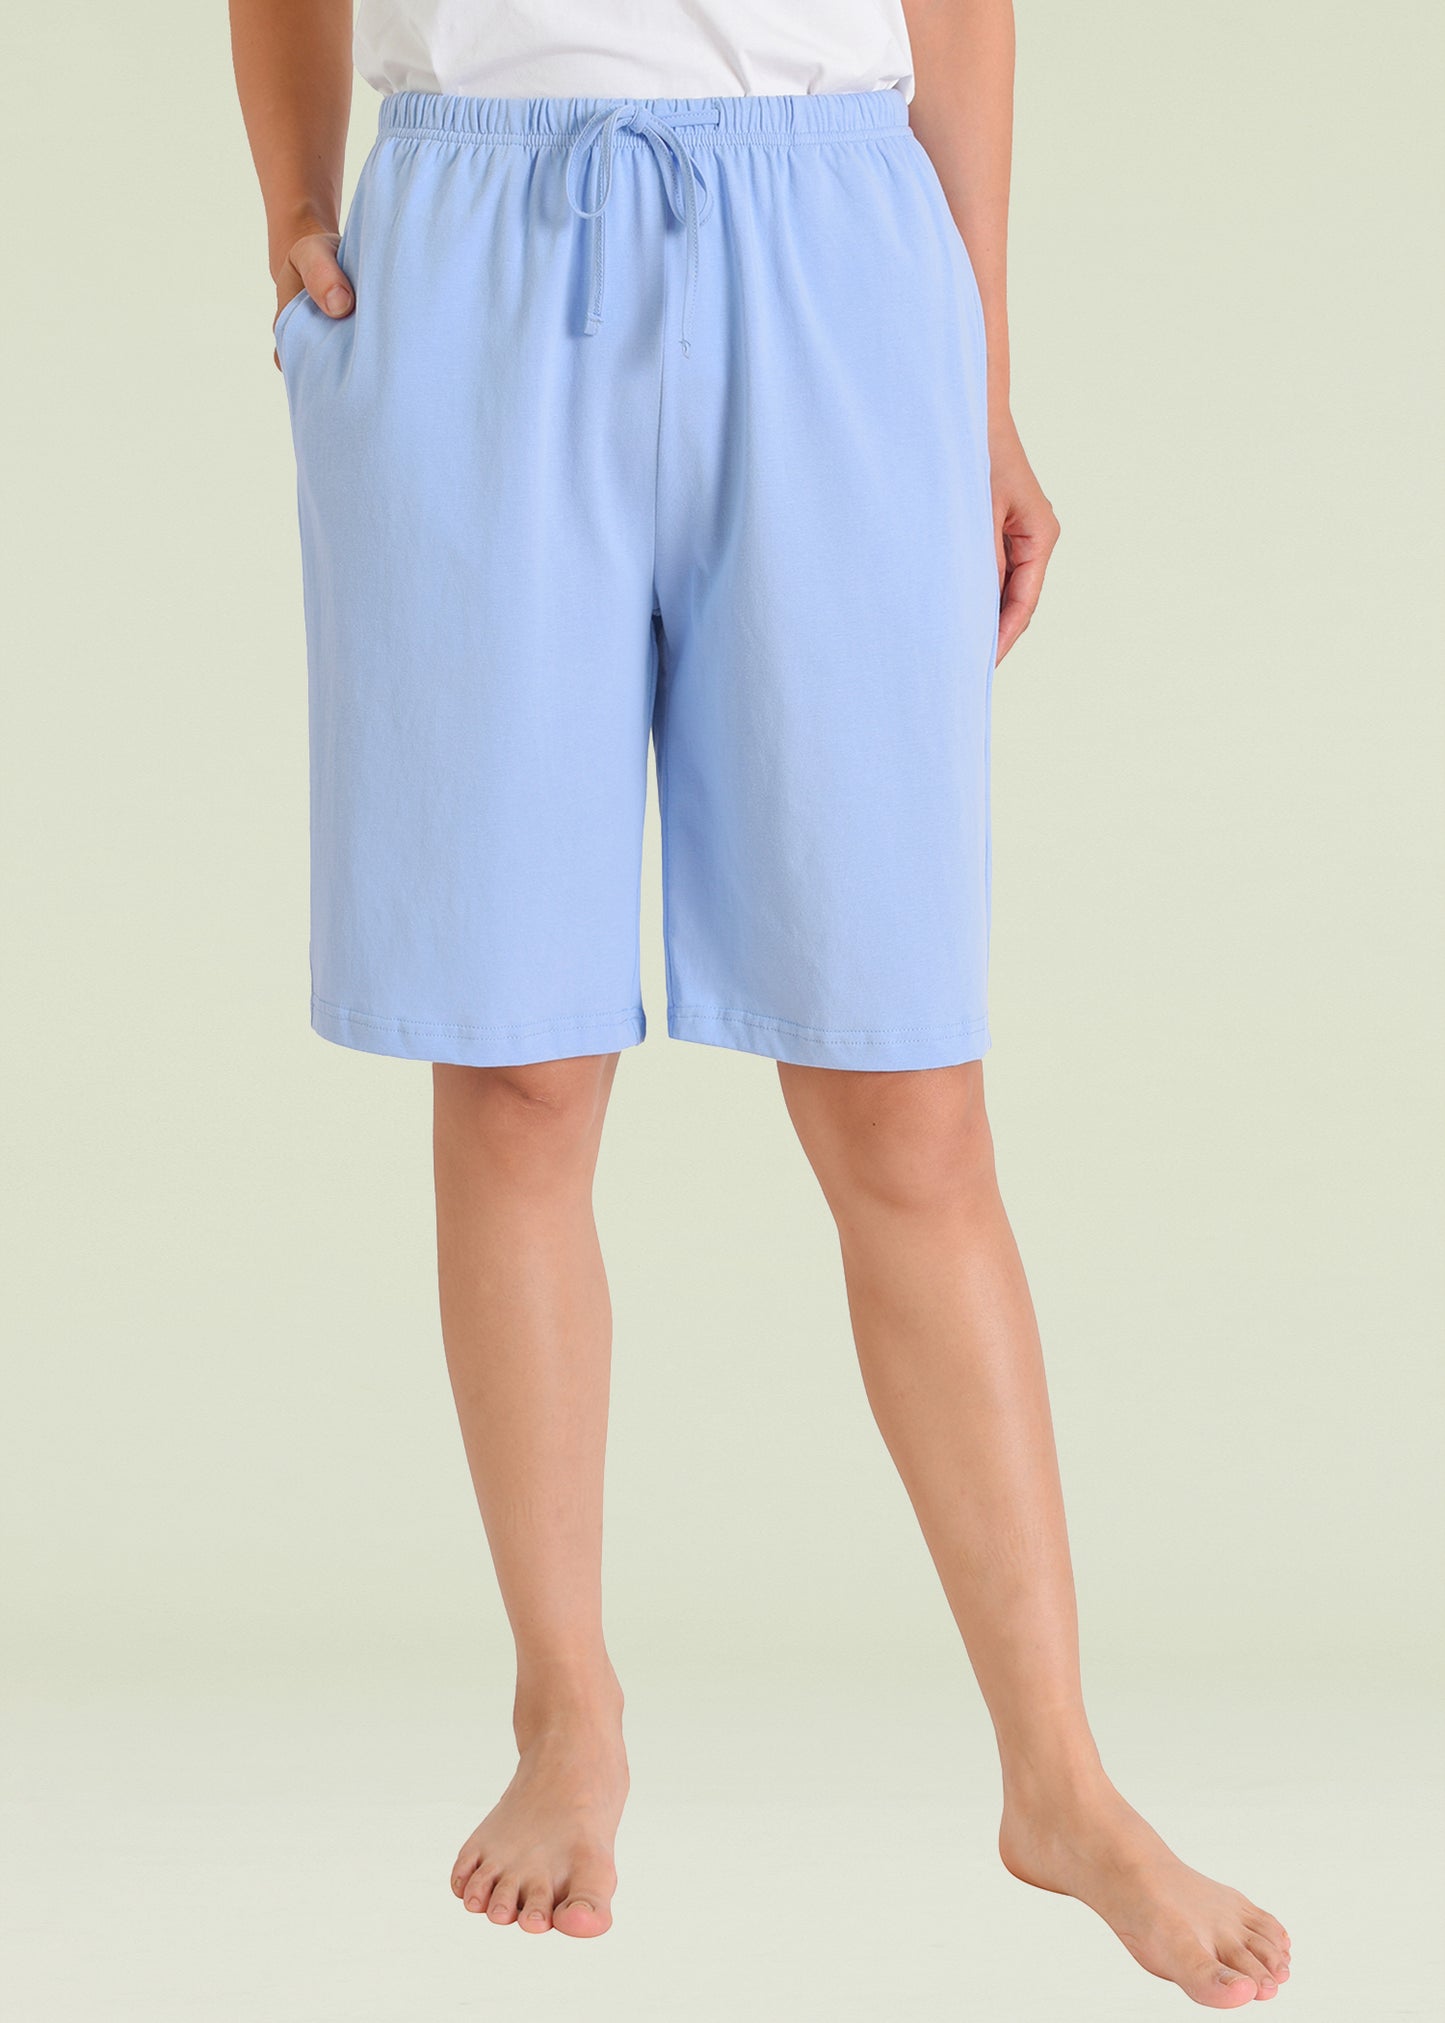 Women's Cotton Pajama Shorts Soft Bermuda Sleep Shorts